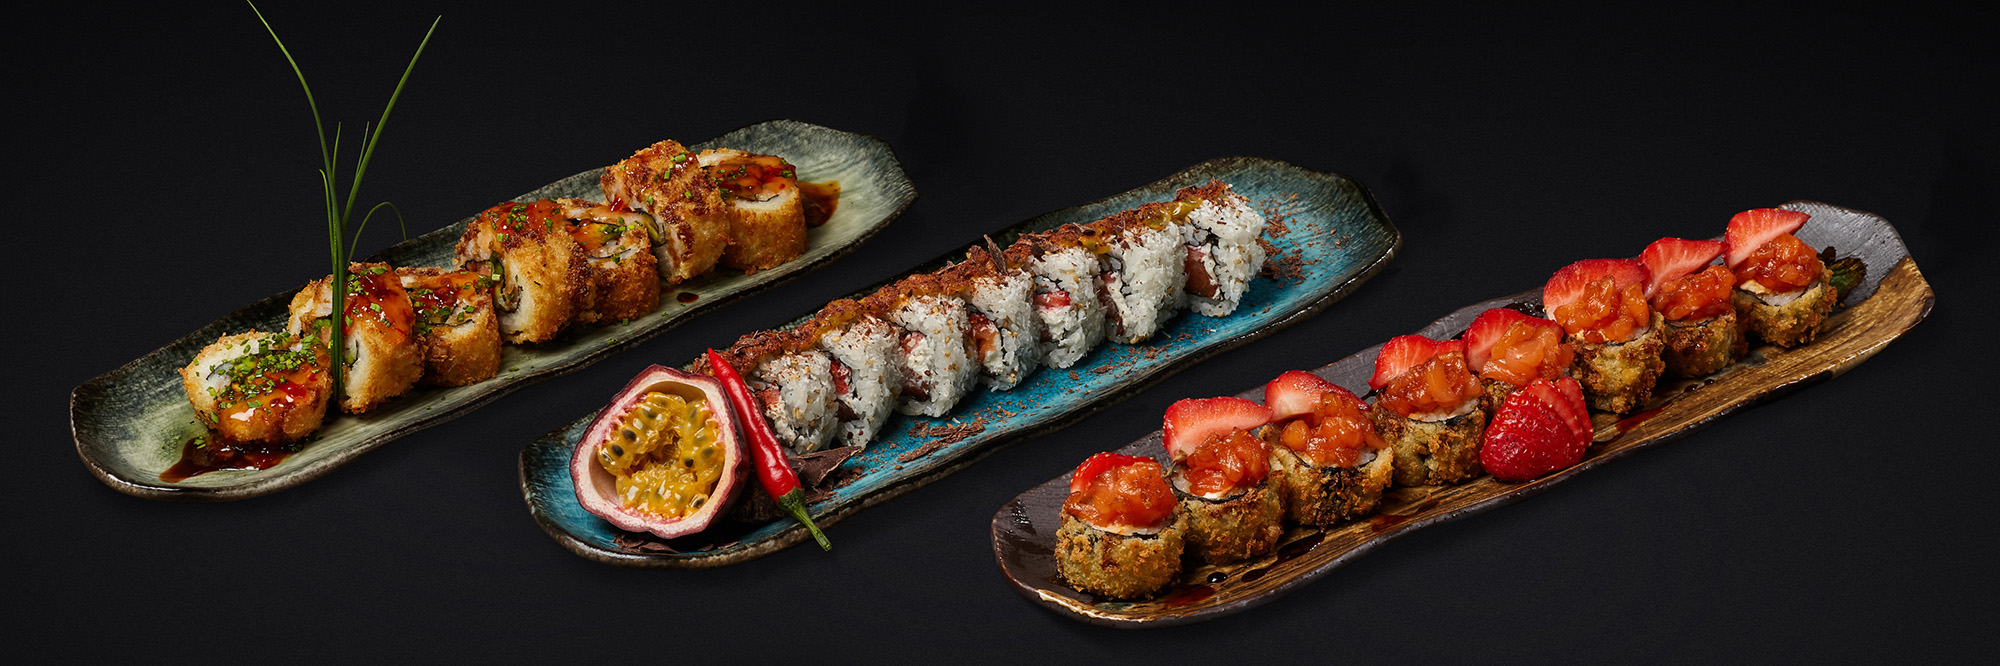 tokyo delicious asian food plates sushi sashimi restaurant menu